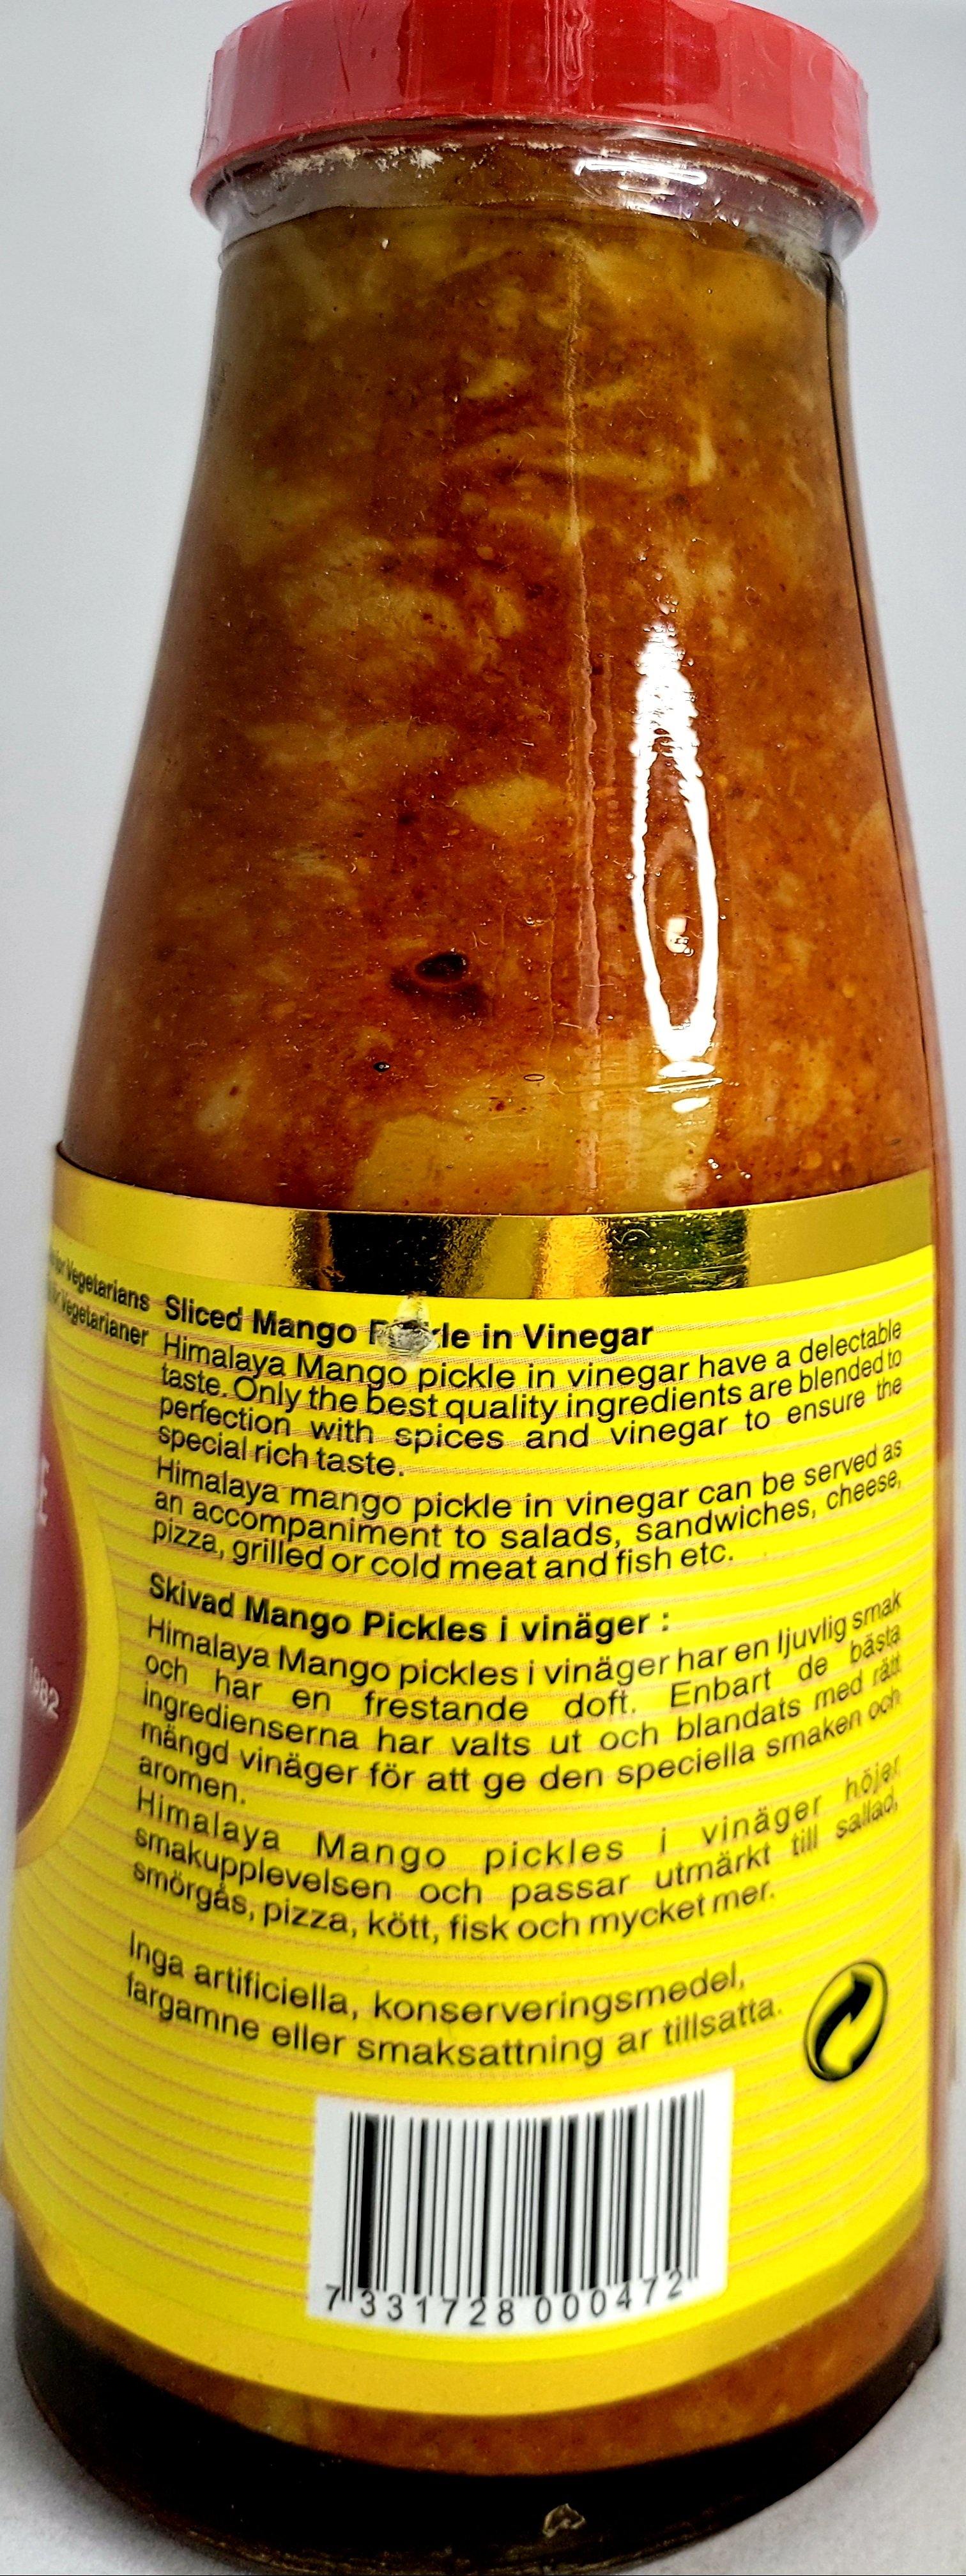 Hot Sliced Mango Pickles Amba 450g - Arabian Shopping Zone